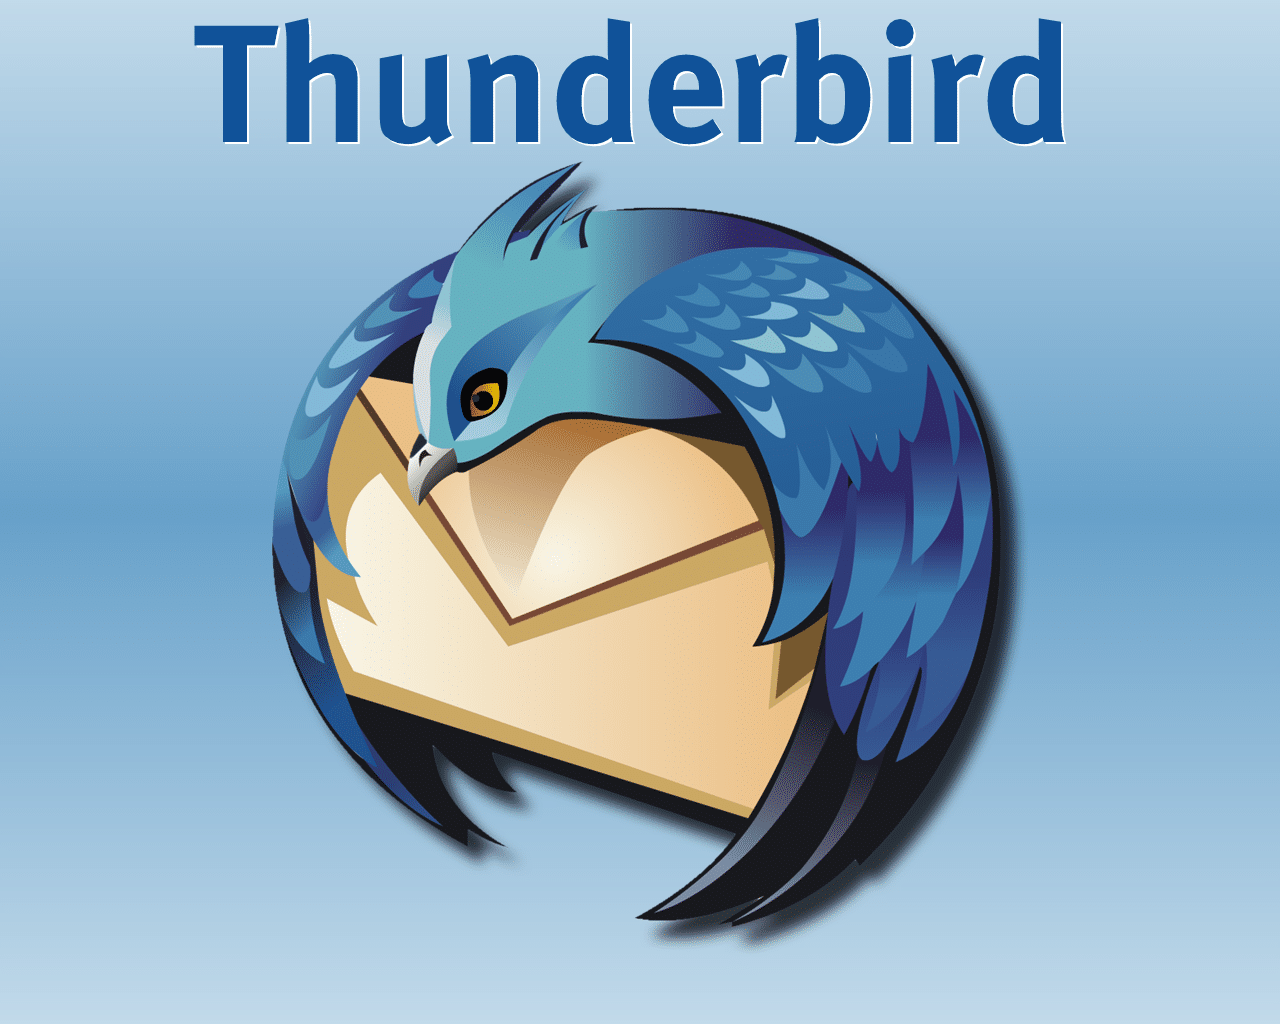 "The Power of Thunderbird" Wallpaper